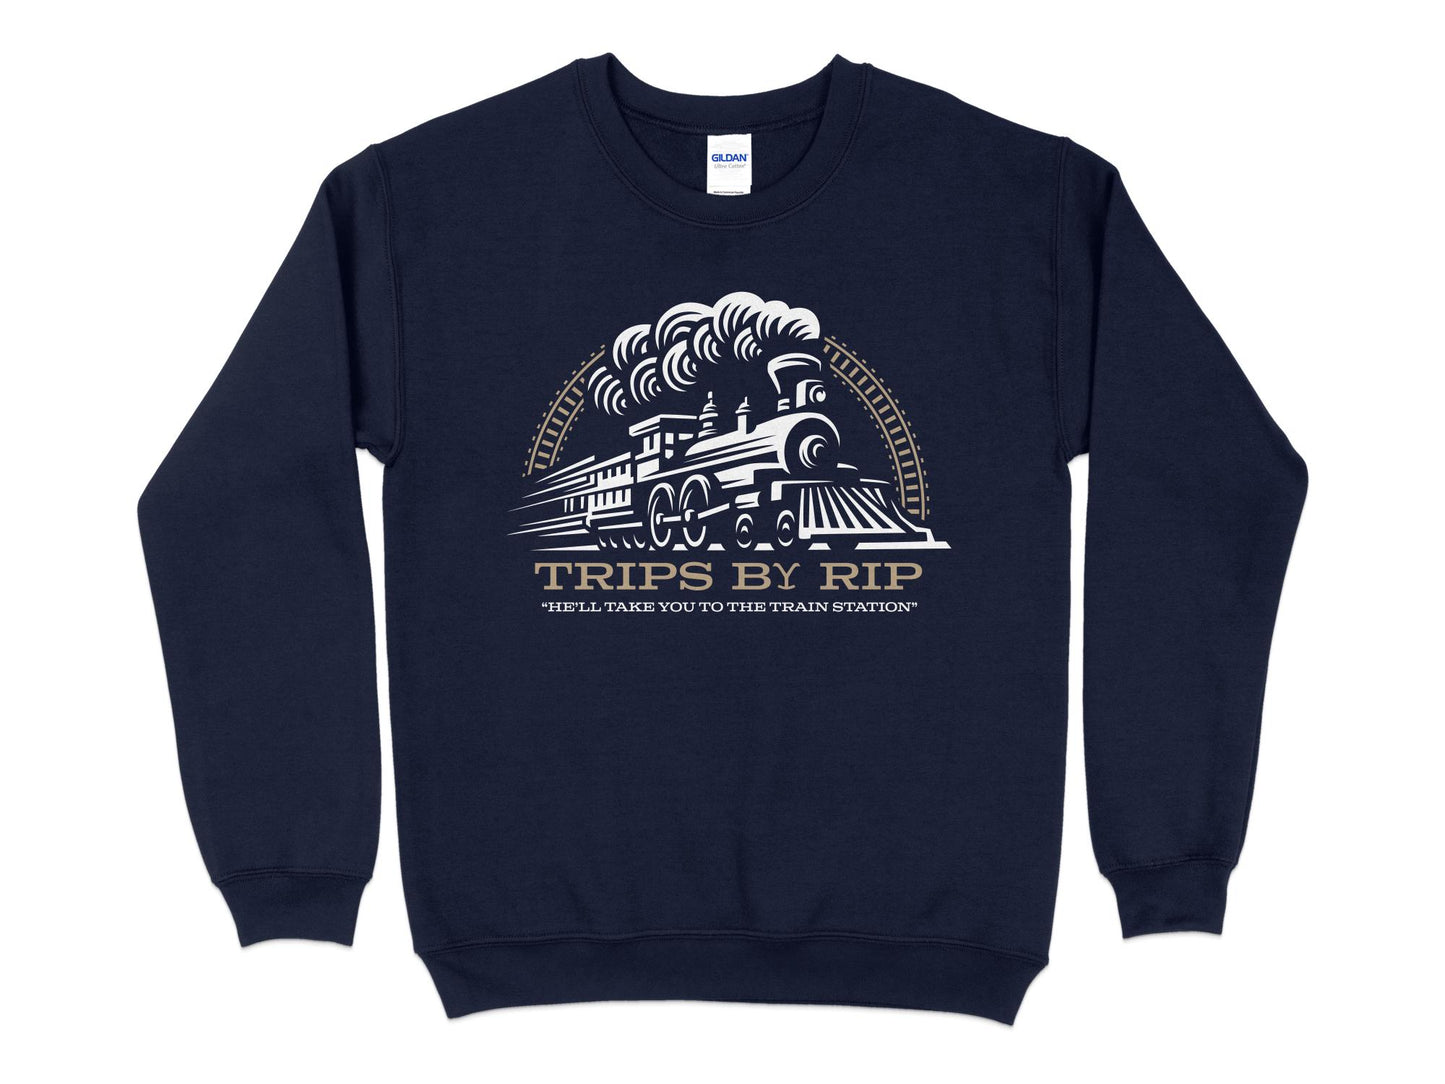 Yellowstone Sweatshirt - Trips By Rip, navy blue